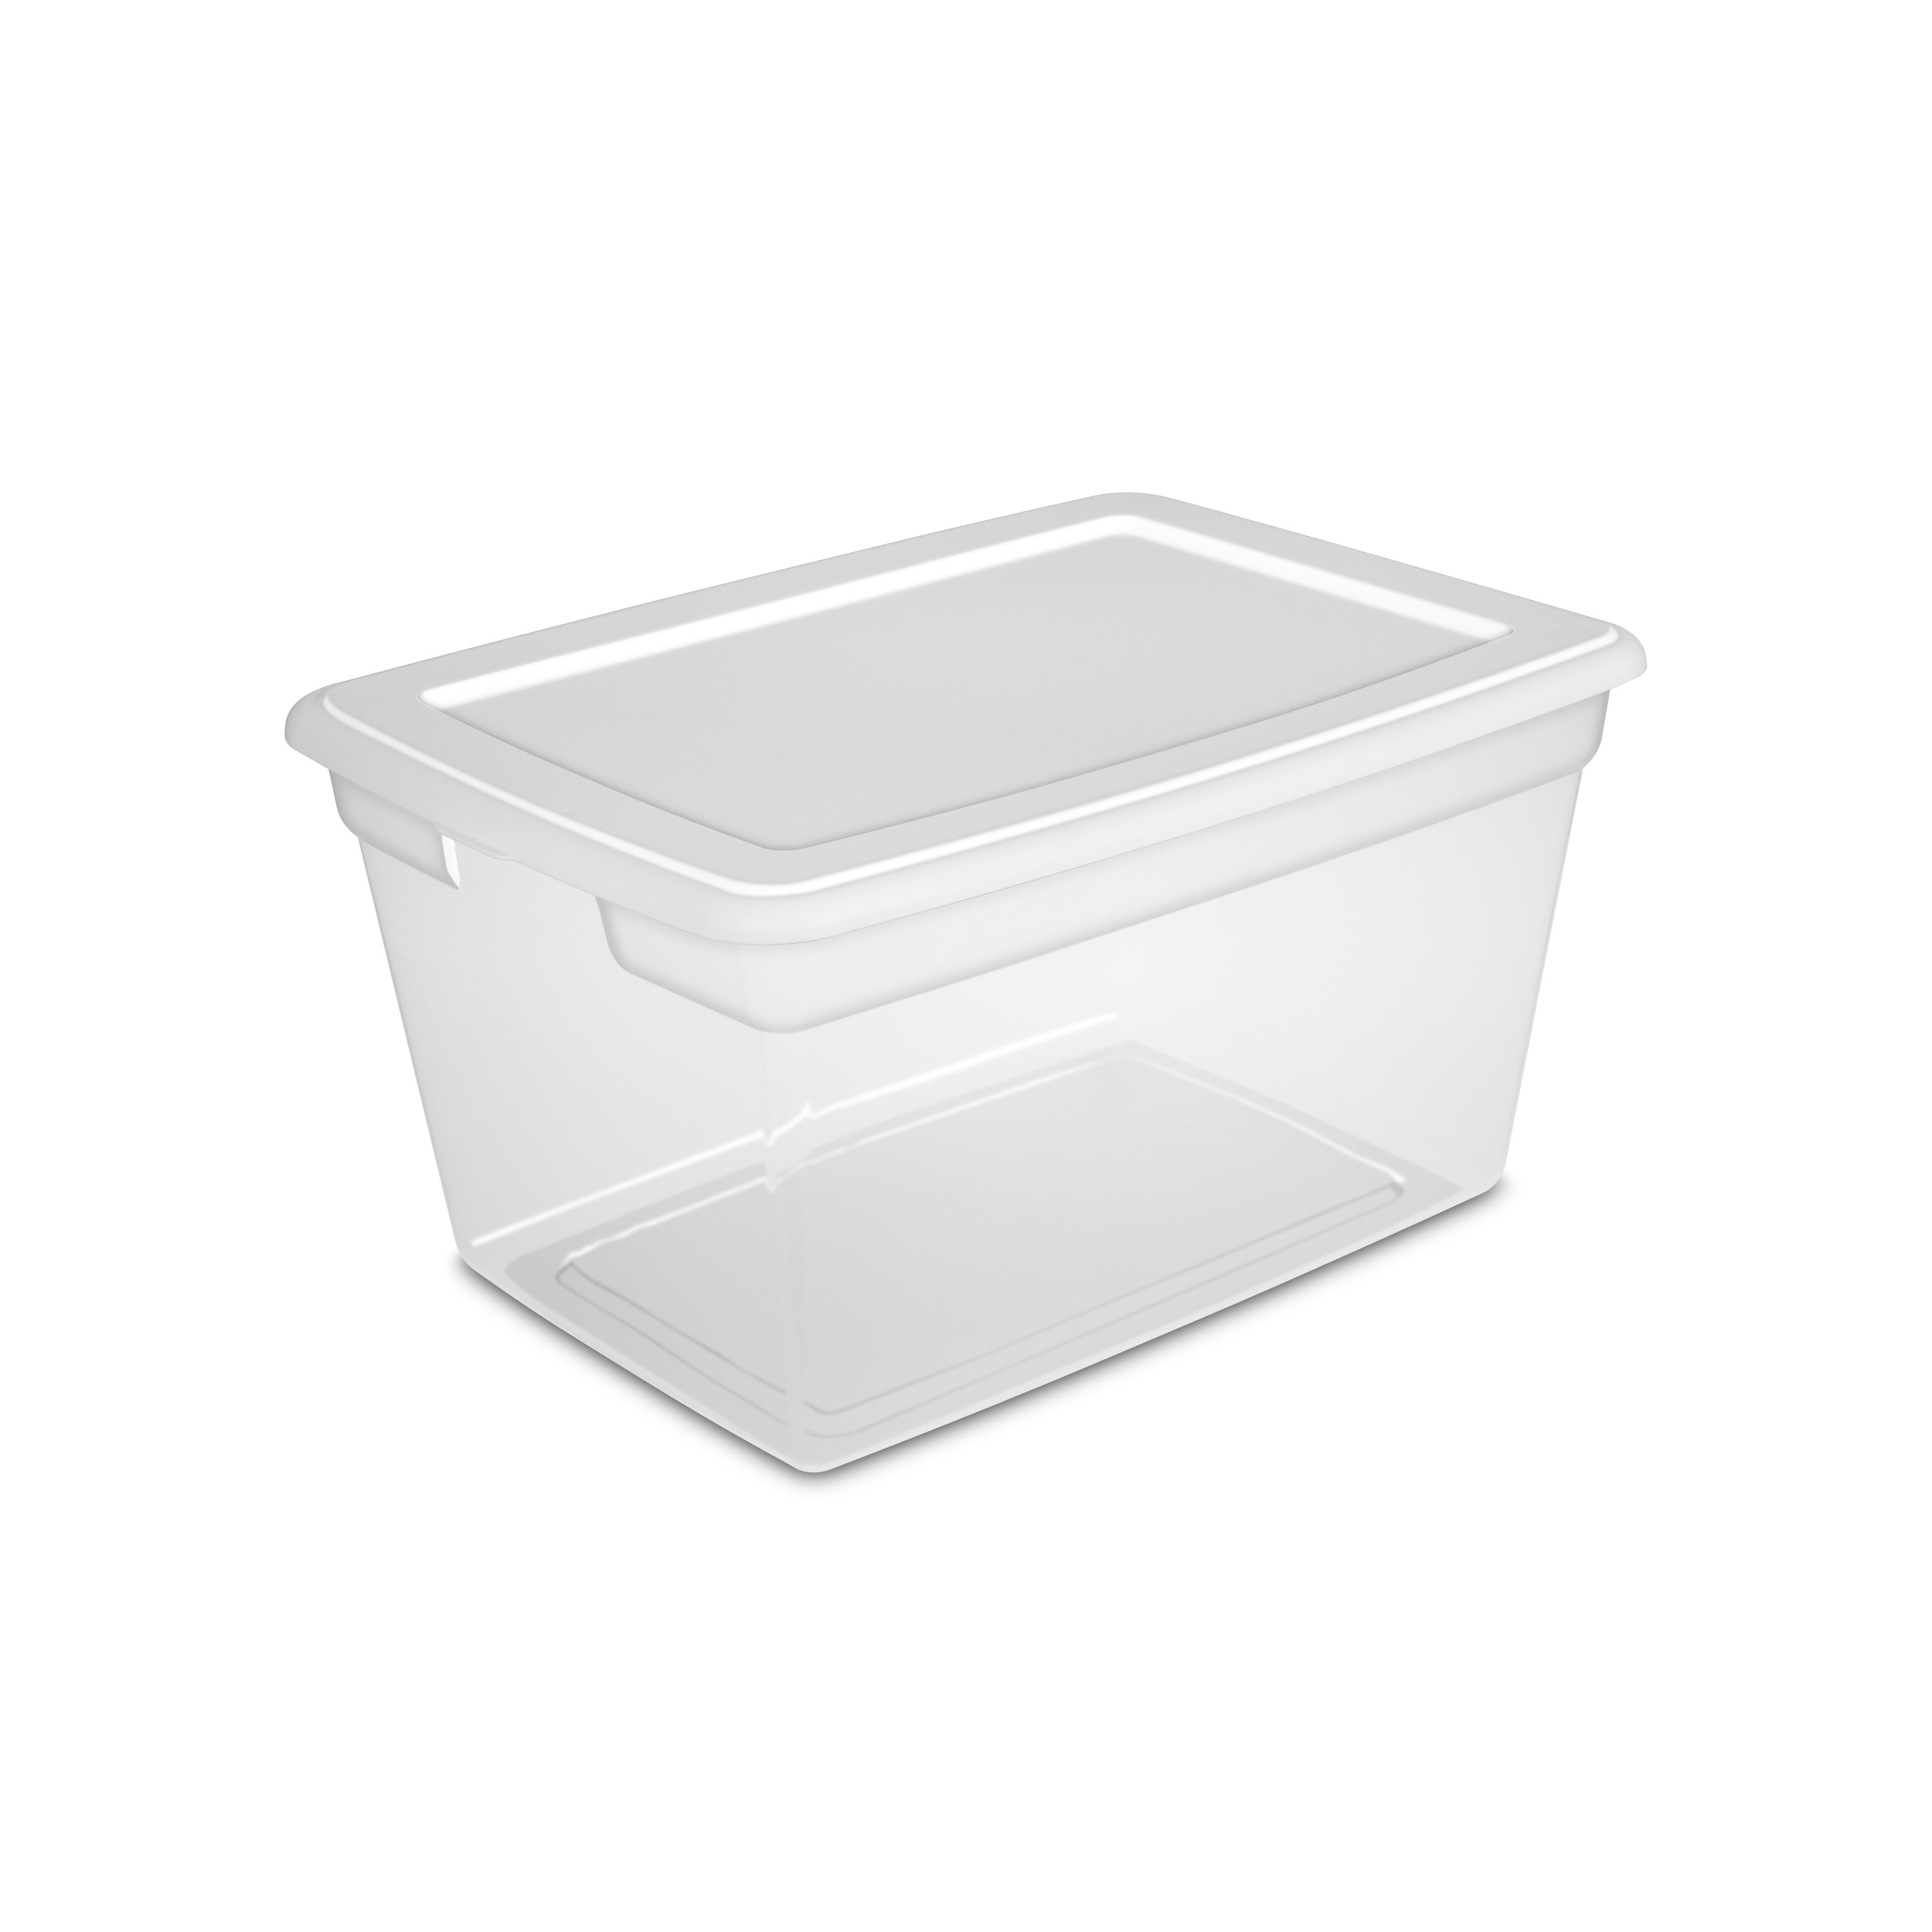 Sterilite 58 Qt. Clear Plastic Storage Box with White Lid - image 1 of 9